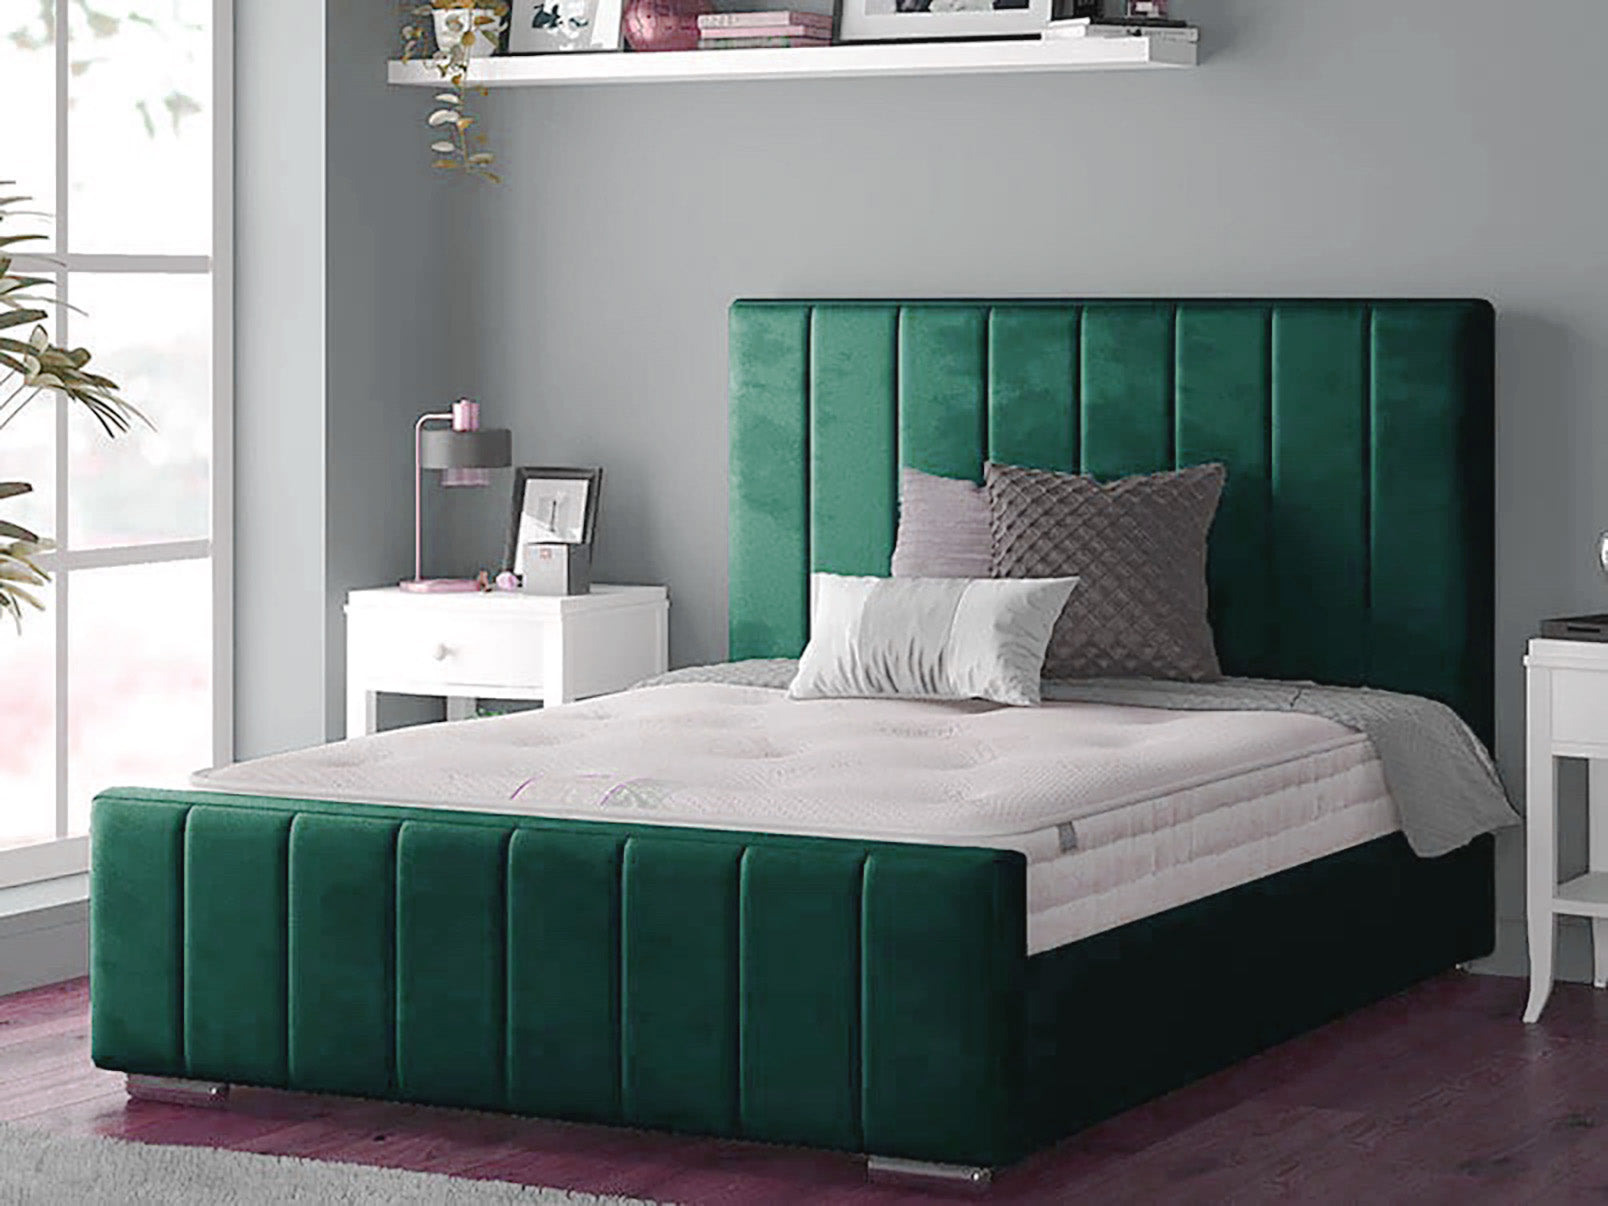 Perth Slatted Bed Frame With Ottoman Lift Storage Option - Plush Velvet Emerald-Green